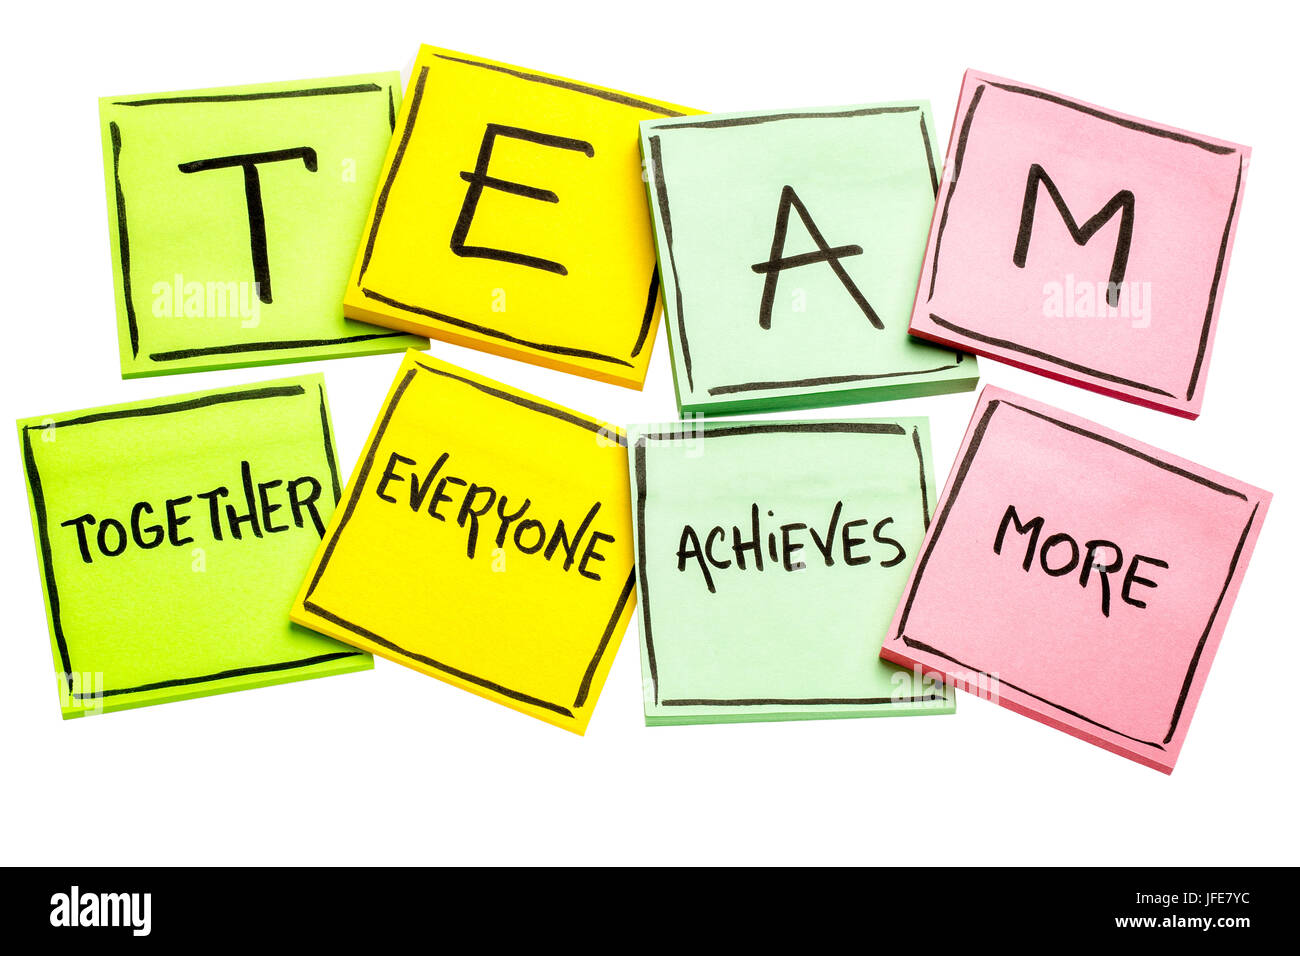 TEAM acronym (together everyone achieves more), teamwork